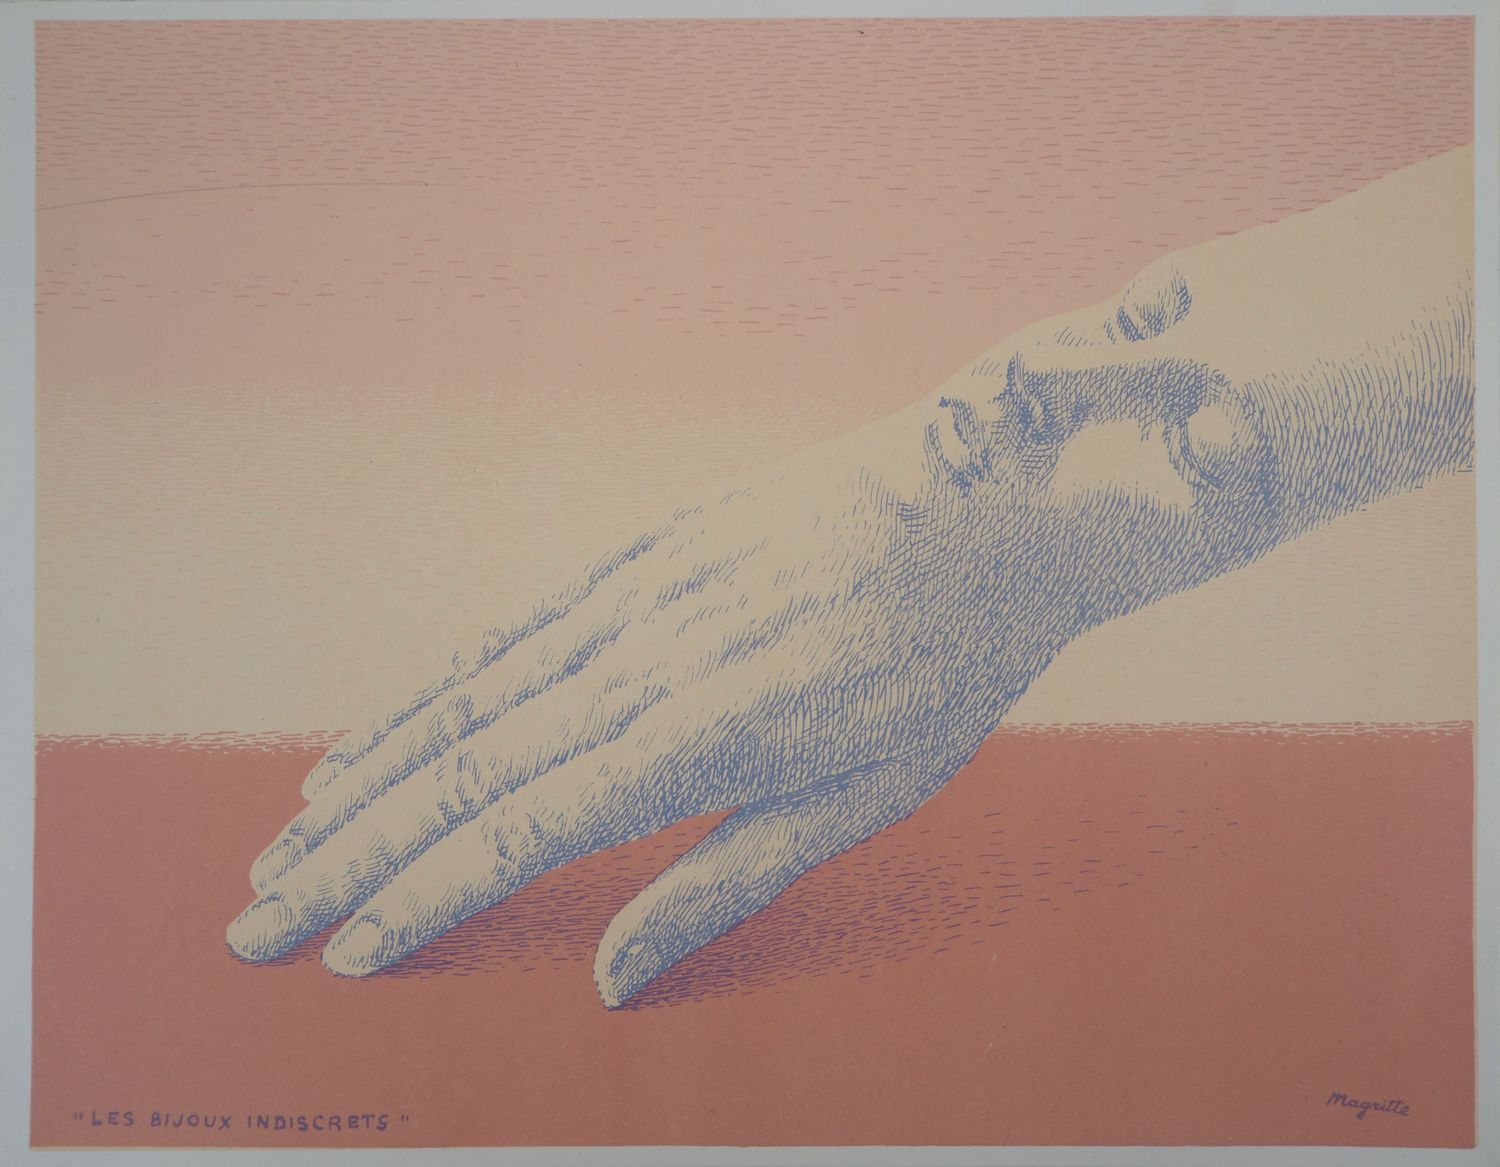 Null René Magritte (1898-1967)

Les bijoux indiscrets, 1963

Litografía original&hellip;